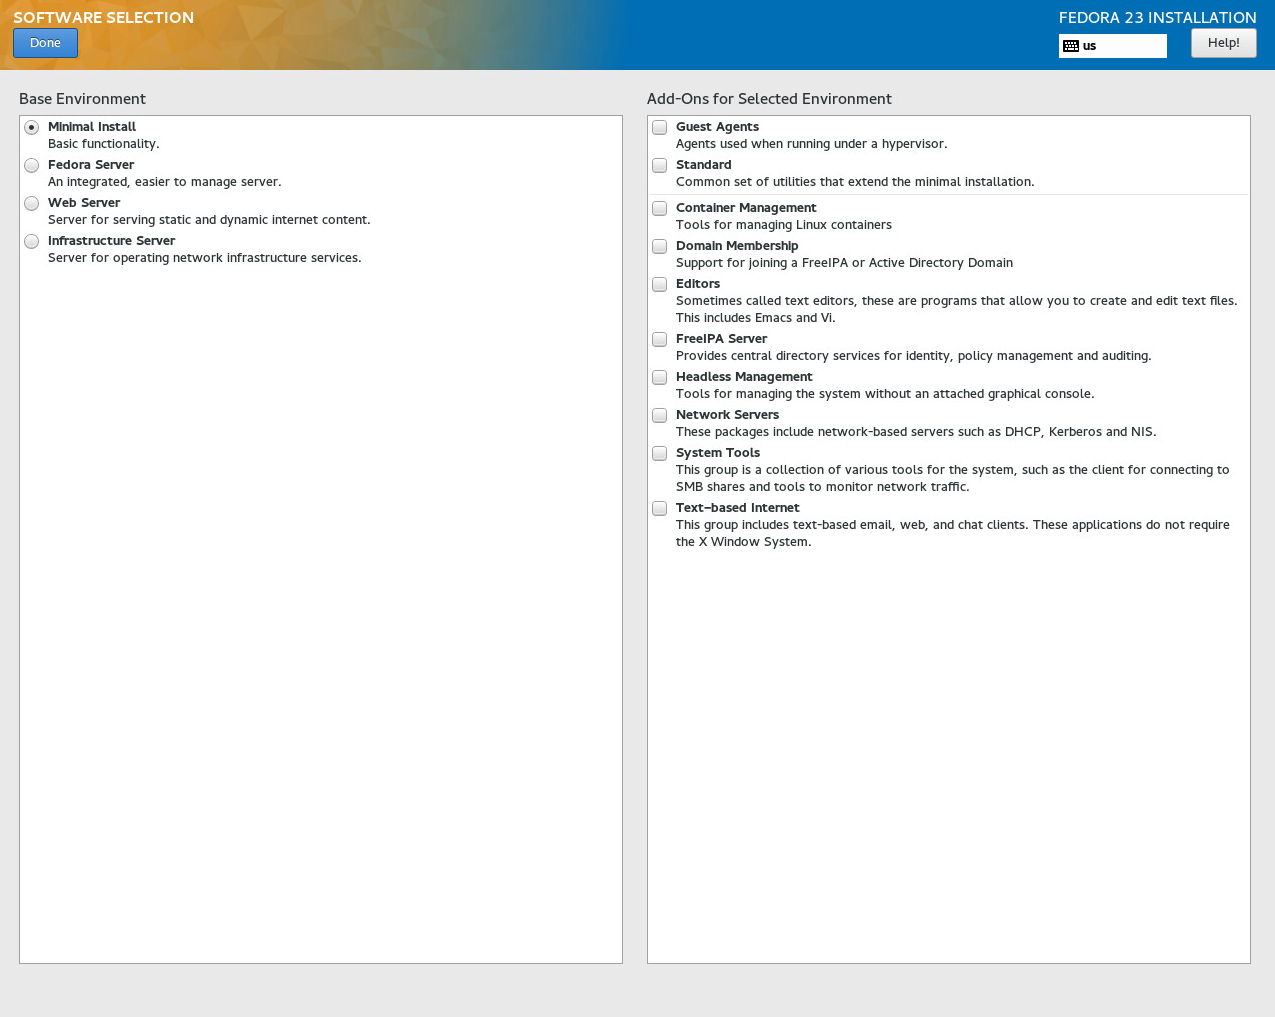 Fedora Installation Software Selection Screen